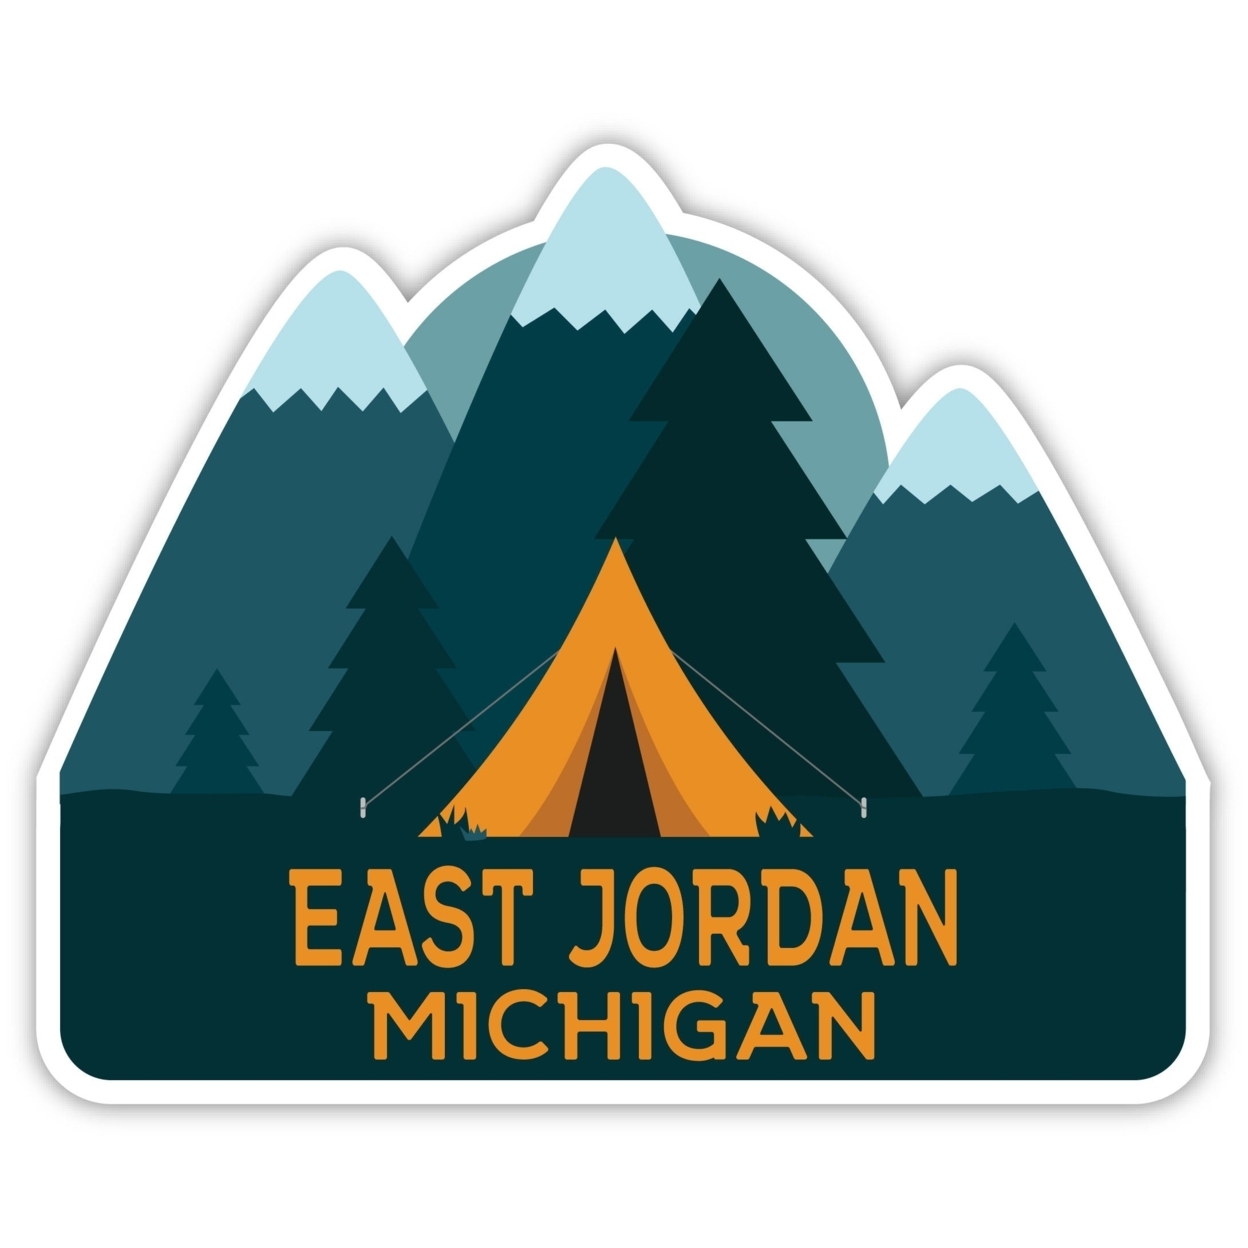 East Jordan Michigan Souvenir Decorative Stickers (Choose Theme And Size) - 4-Pack, 4-Inch, Tent